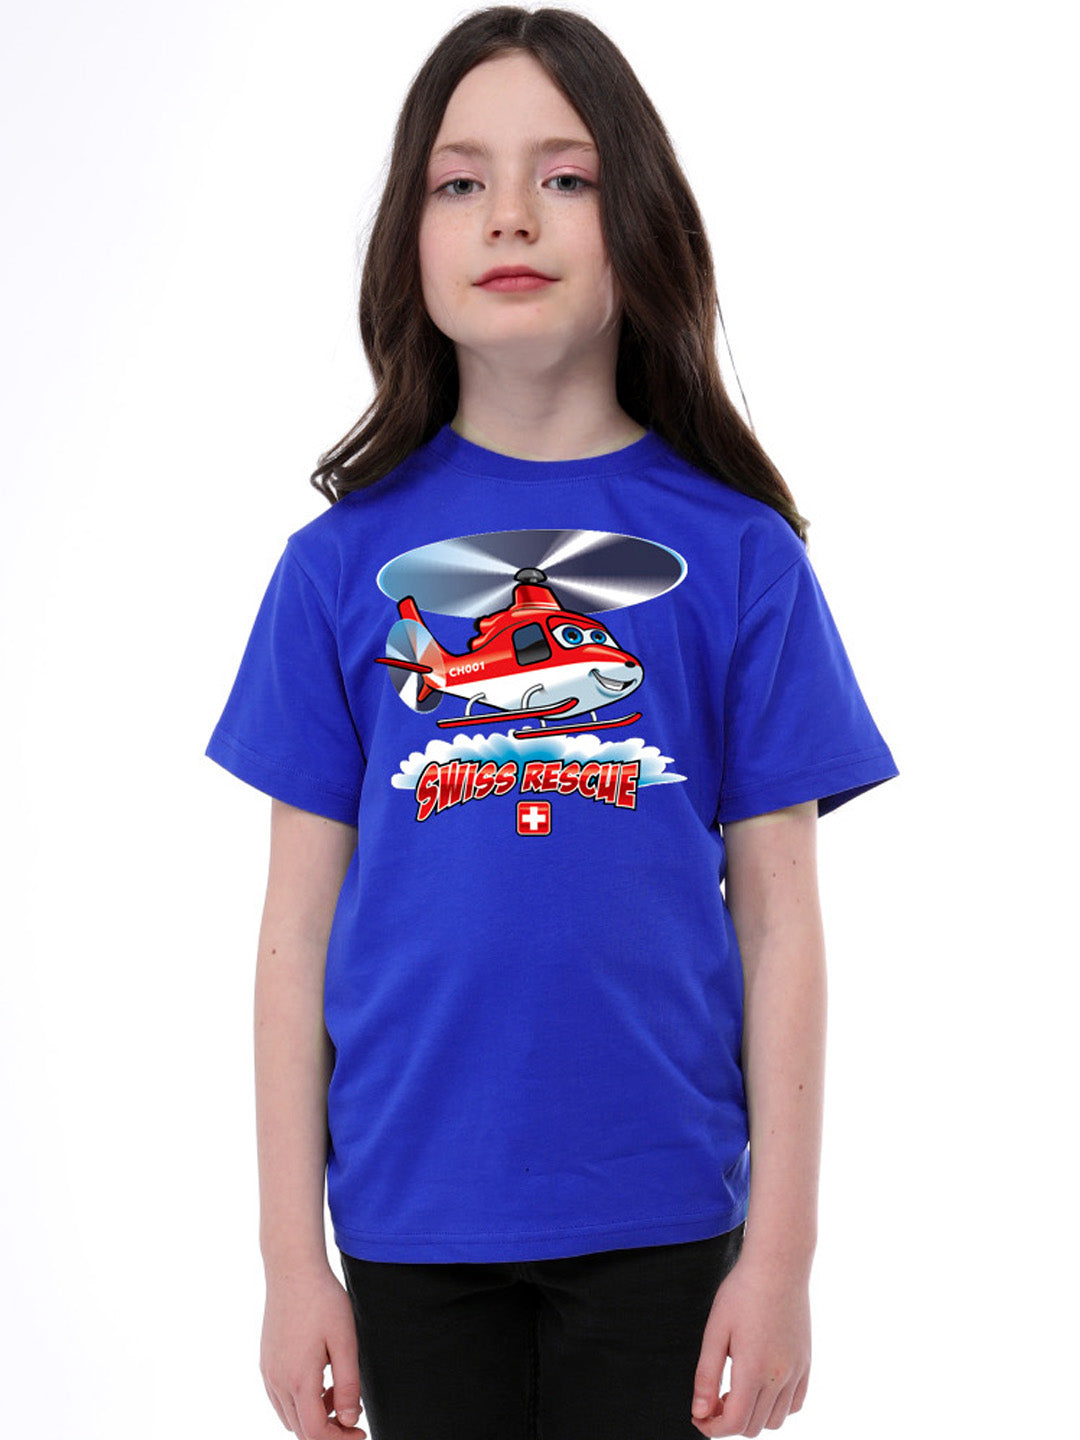 T-shirt KIDS SWISS RESCUE - 2097